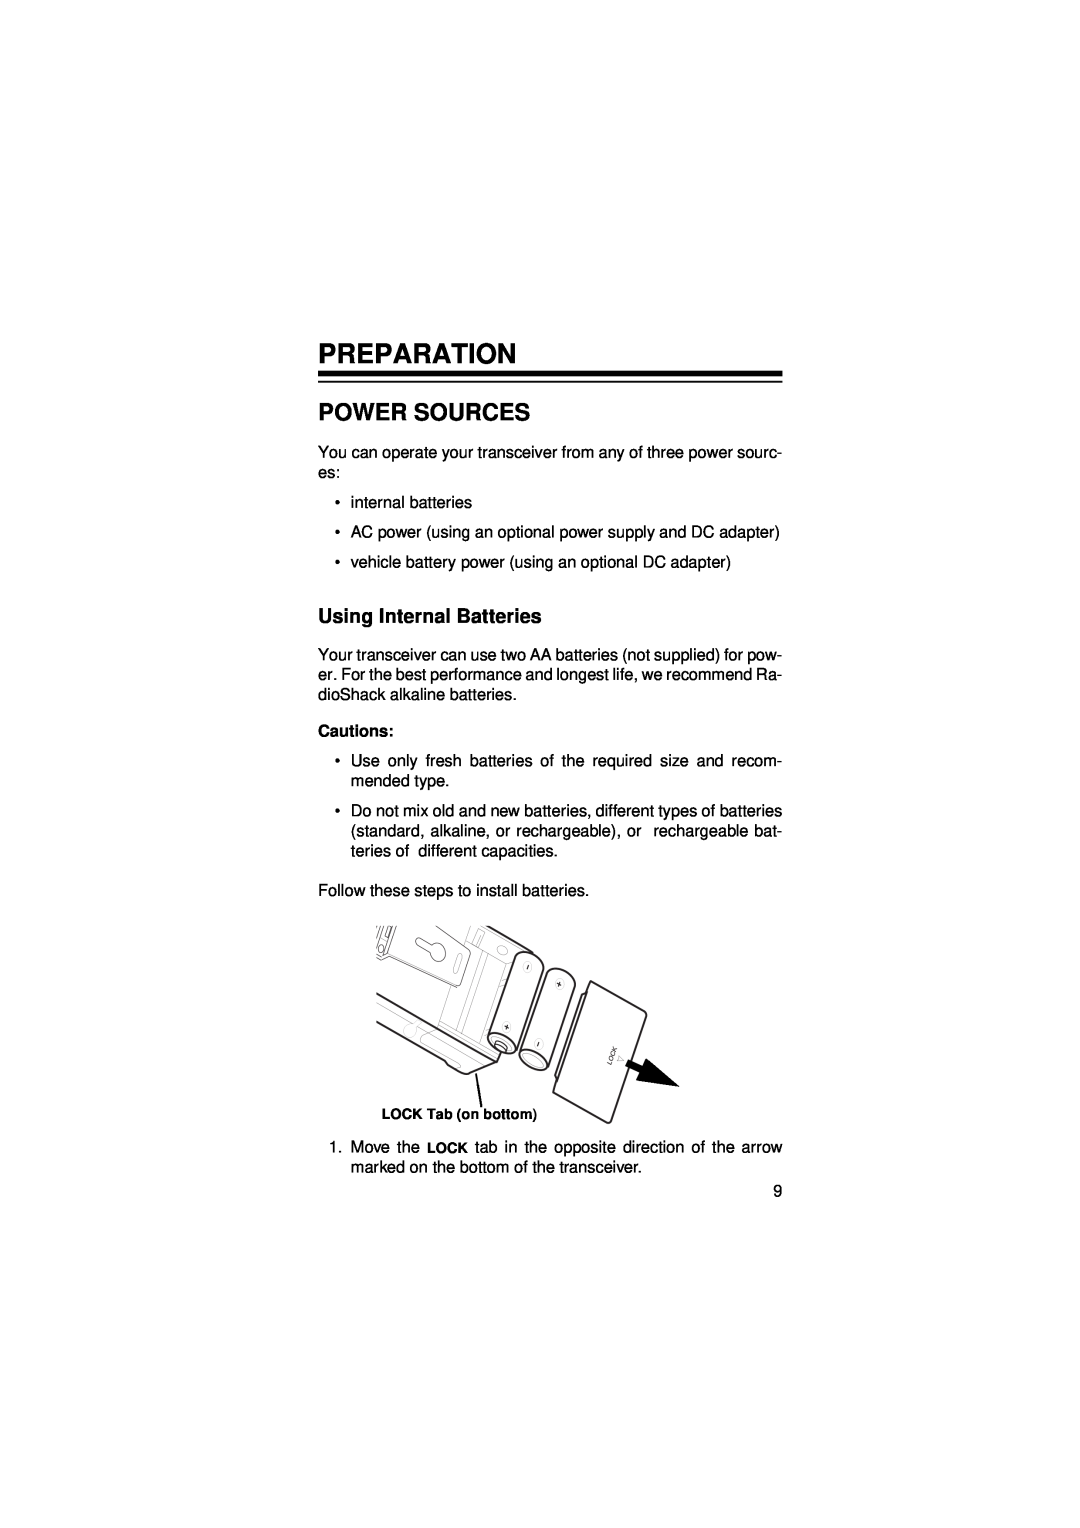 Radio Shack HTX-400 owner manual Preparation, Power Sources, Using Internal Batteries 